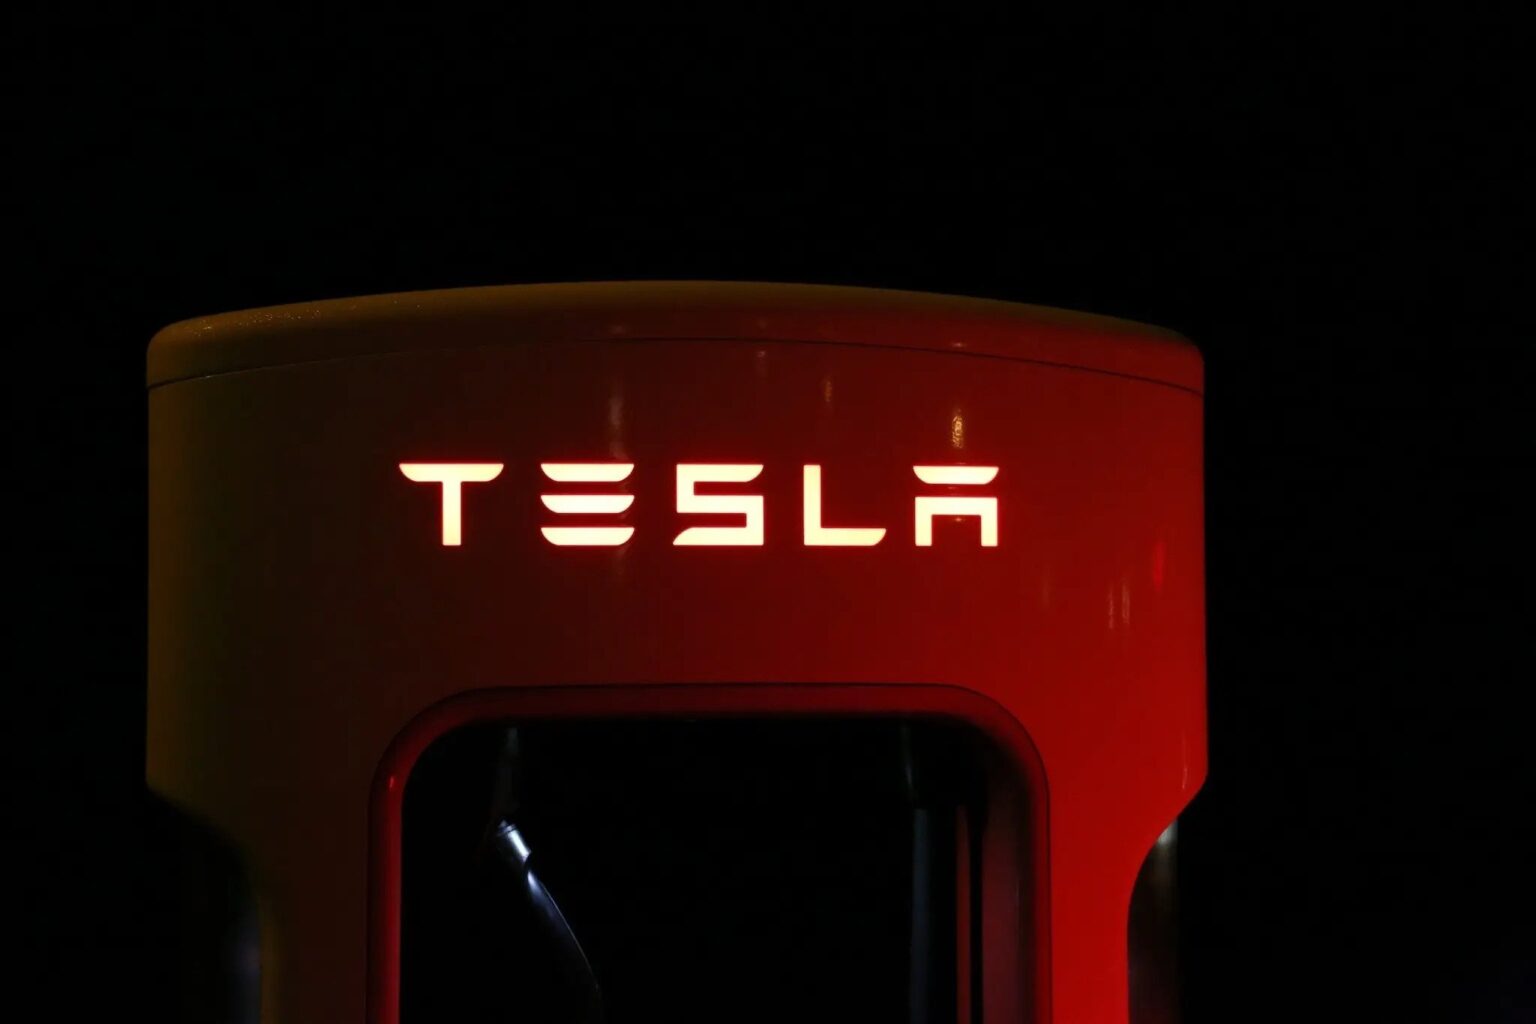 Tesla: A company synonymous with innovation